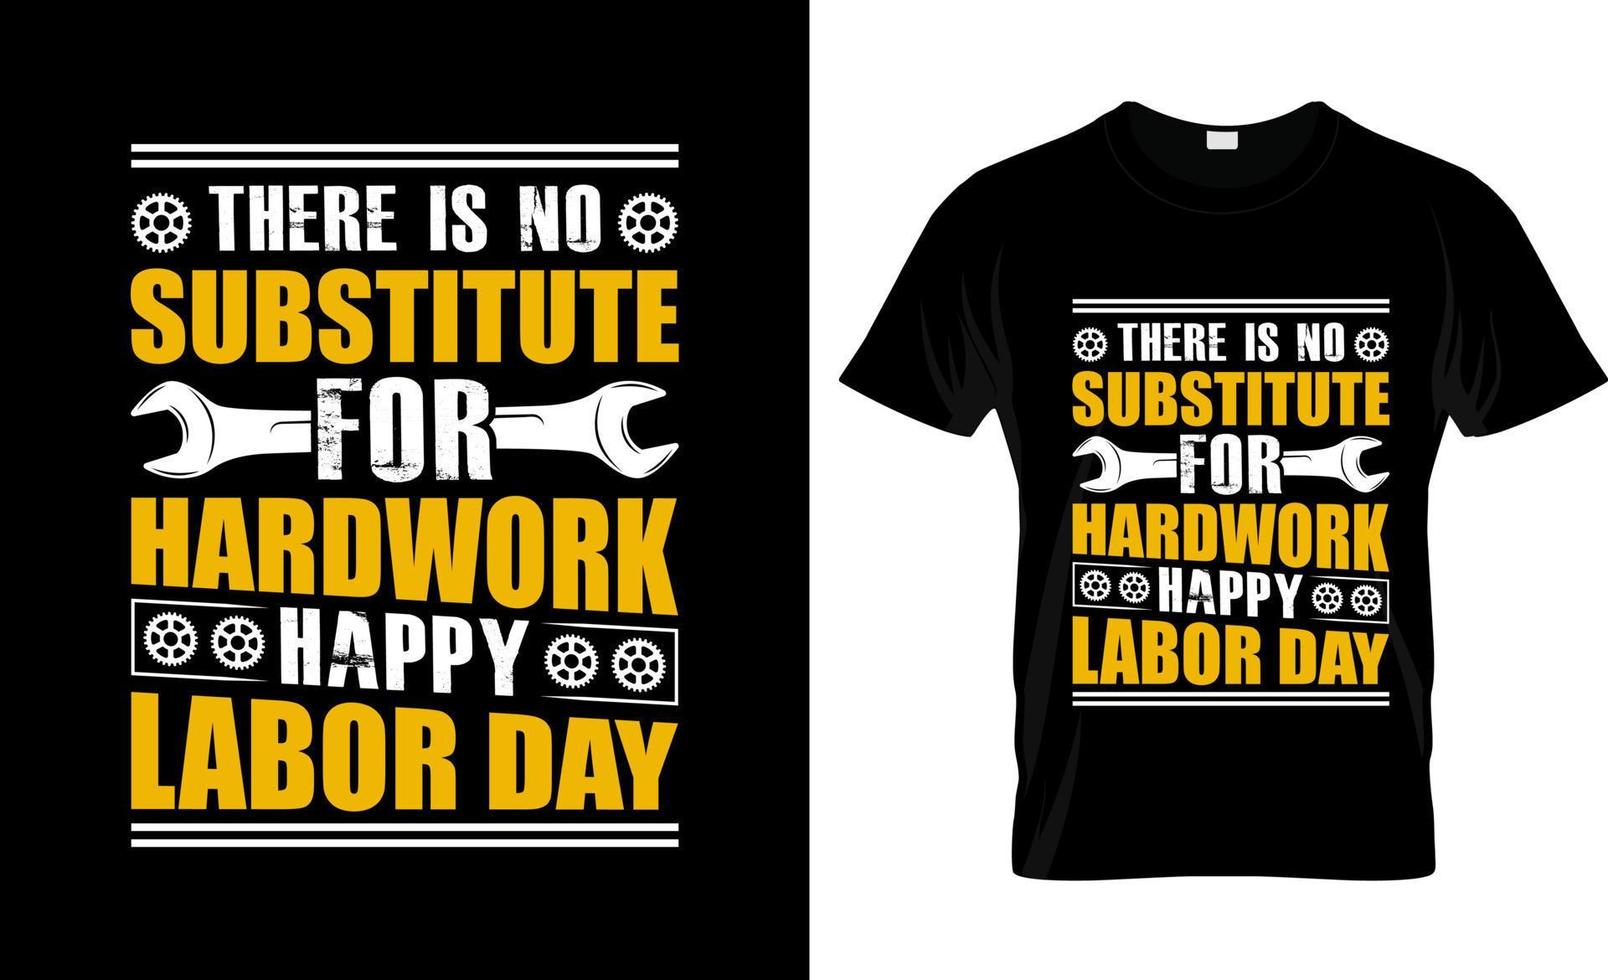 arbeid dag t-shirt ontwerp, arbeid dag t-shirt leuze en kleding ontwerp, arbeid dag typografie, arbeid dag vector, arbeid dag illustratie vector